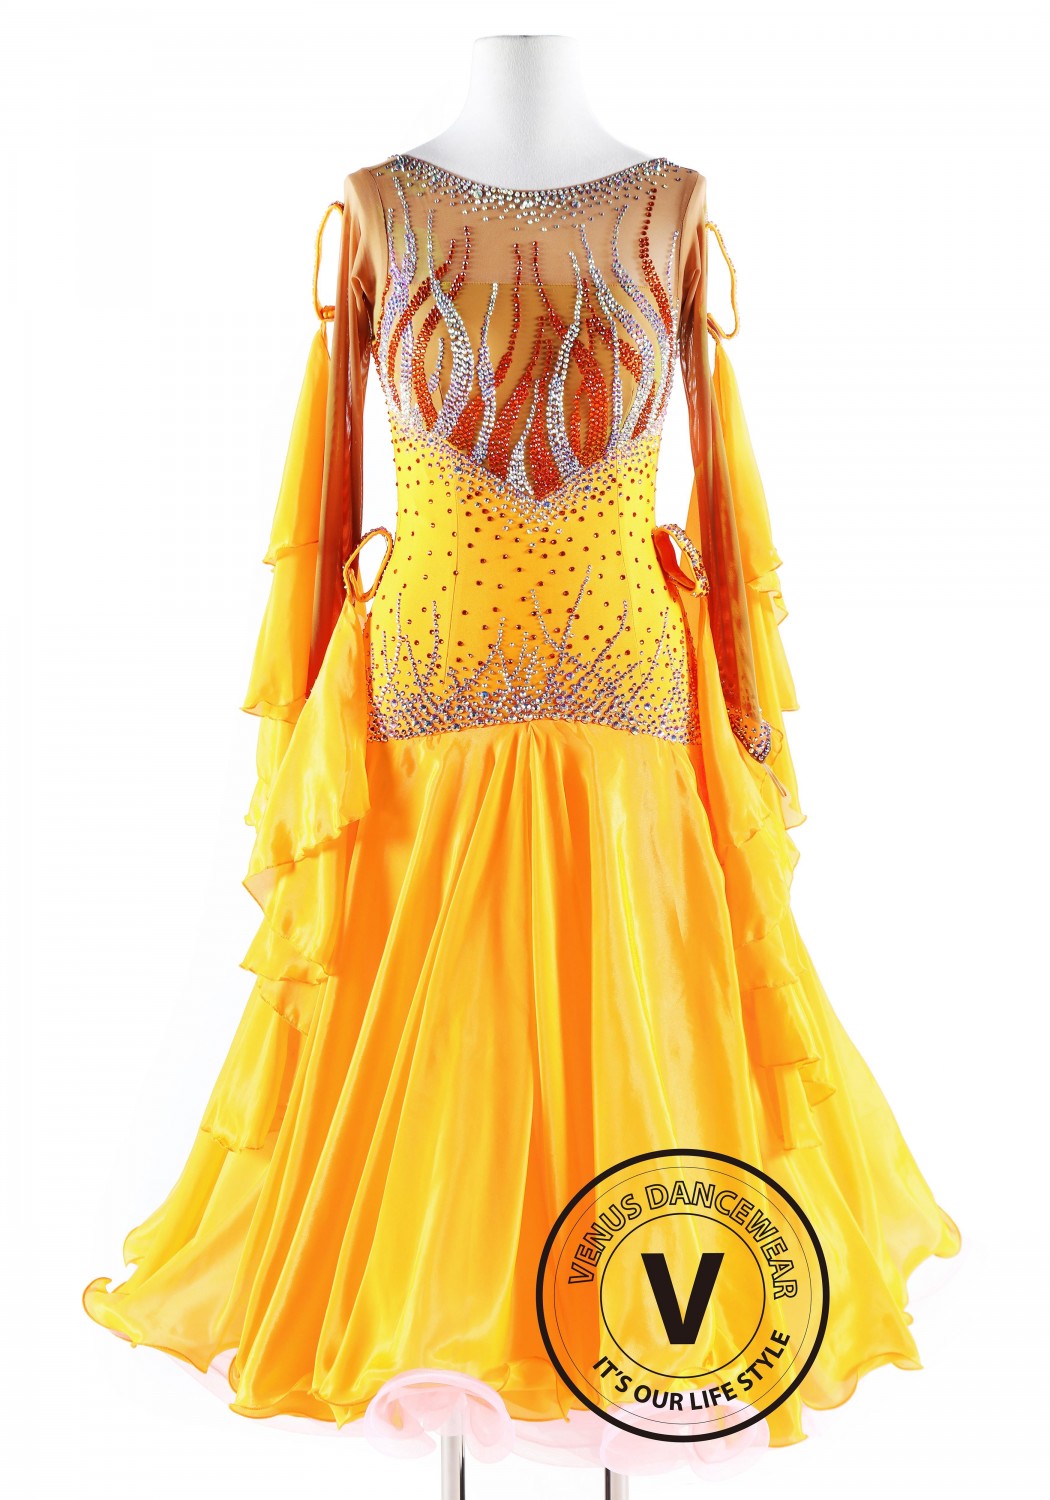 Yellow Luxury Satin Chiffon Ballroom Competition Dance Dress